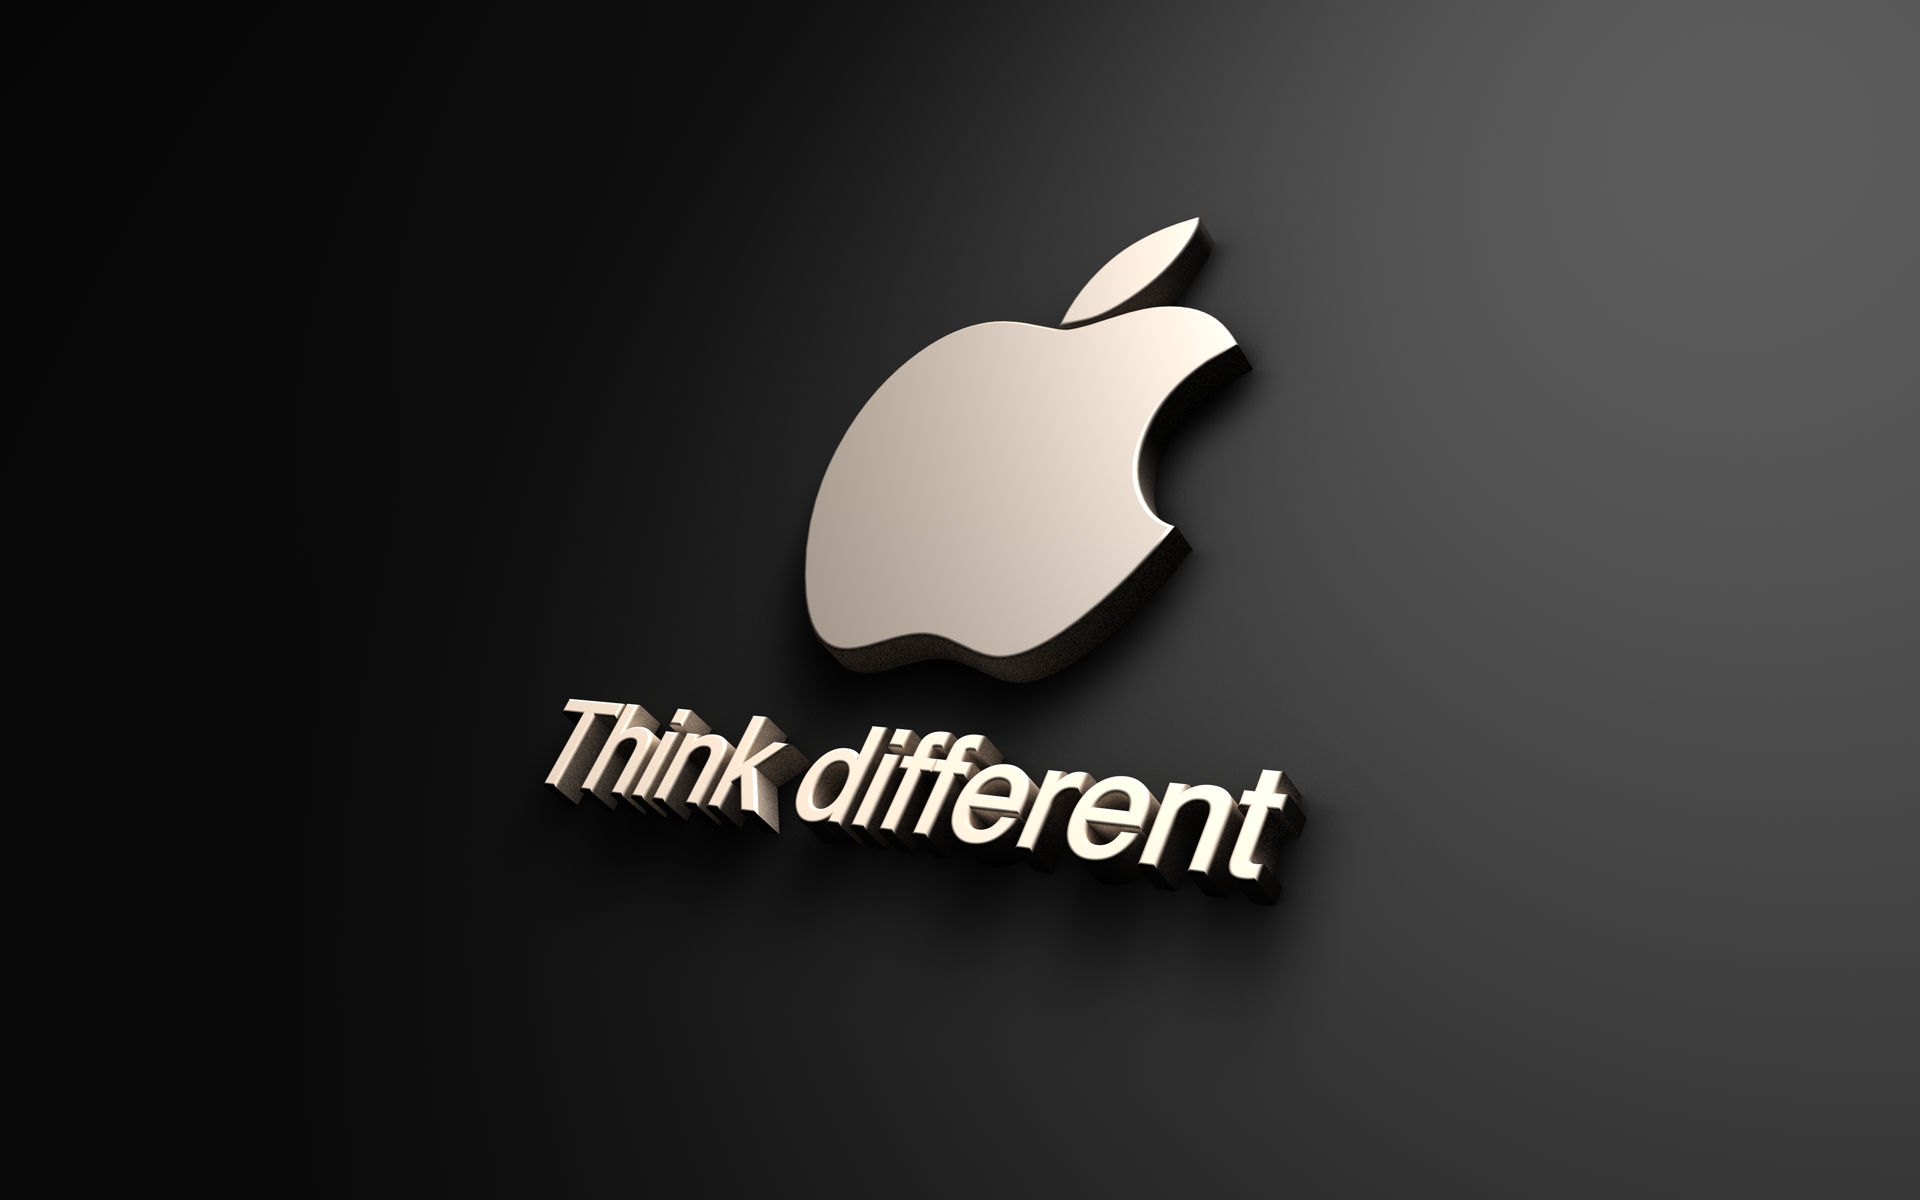 72+] Think Different Apple Wallpaper - WallpaperSafari